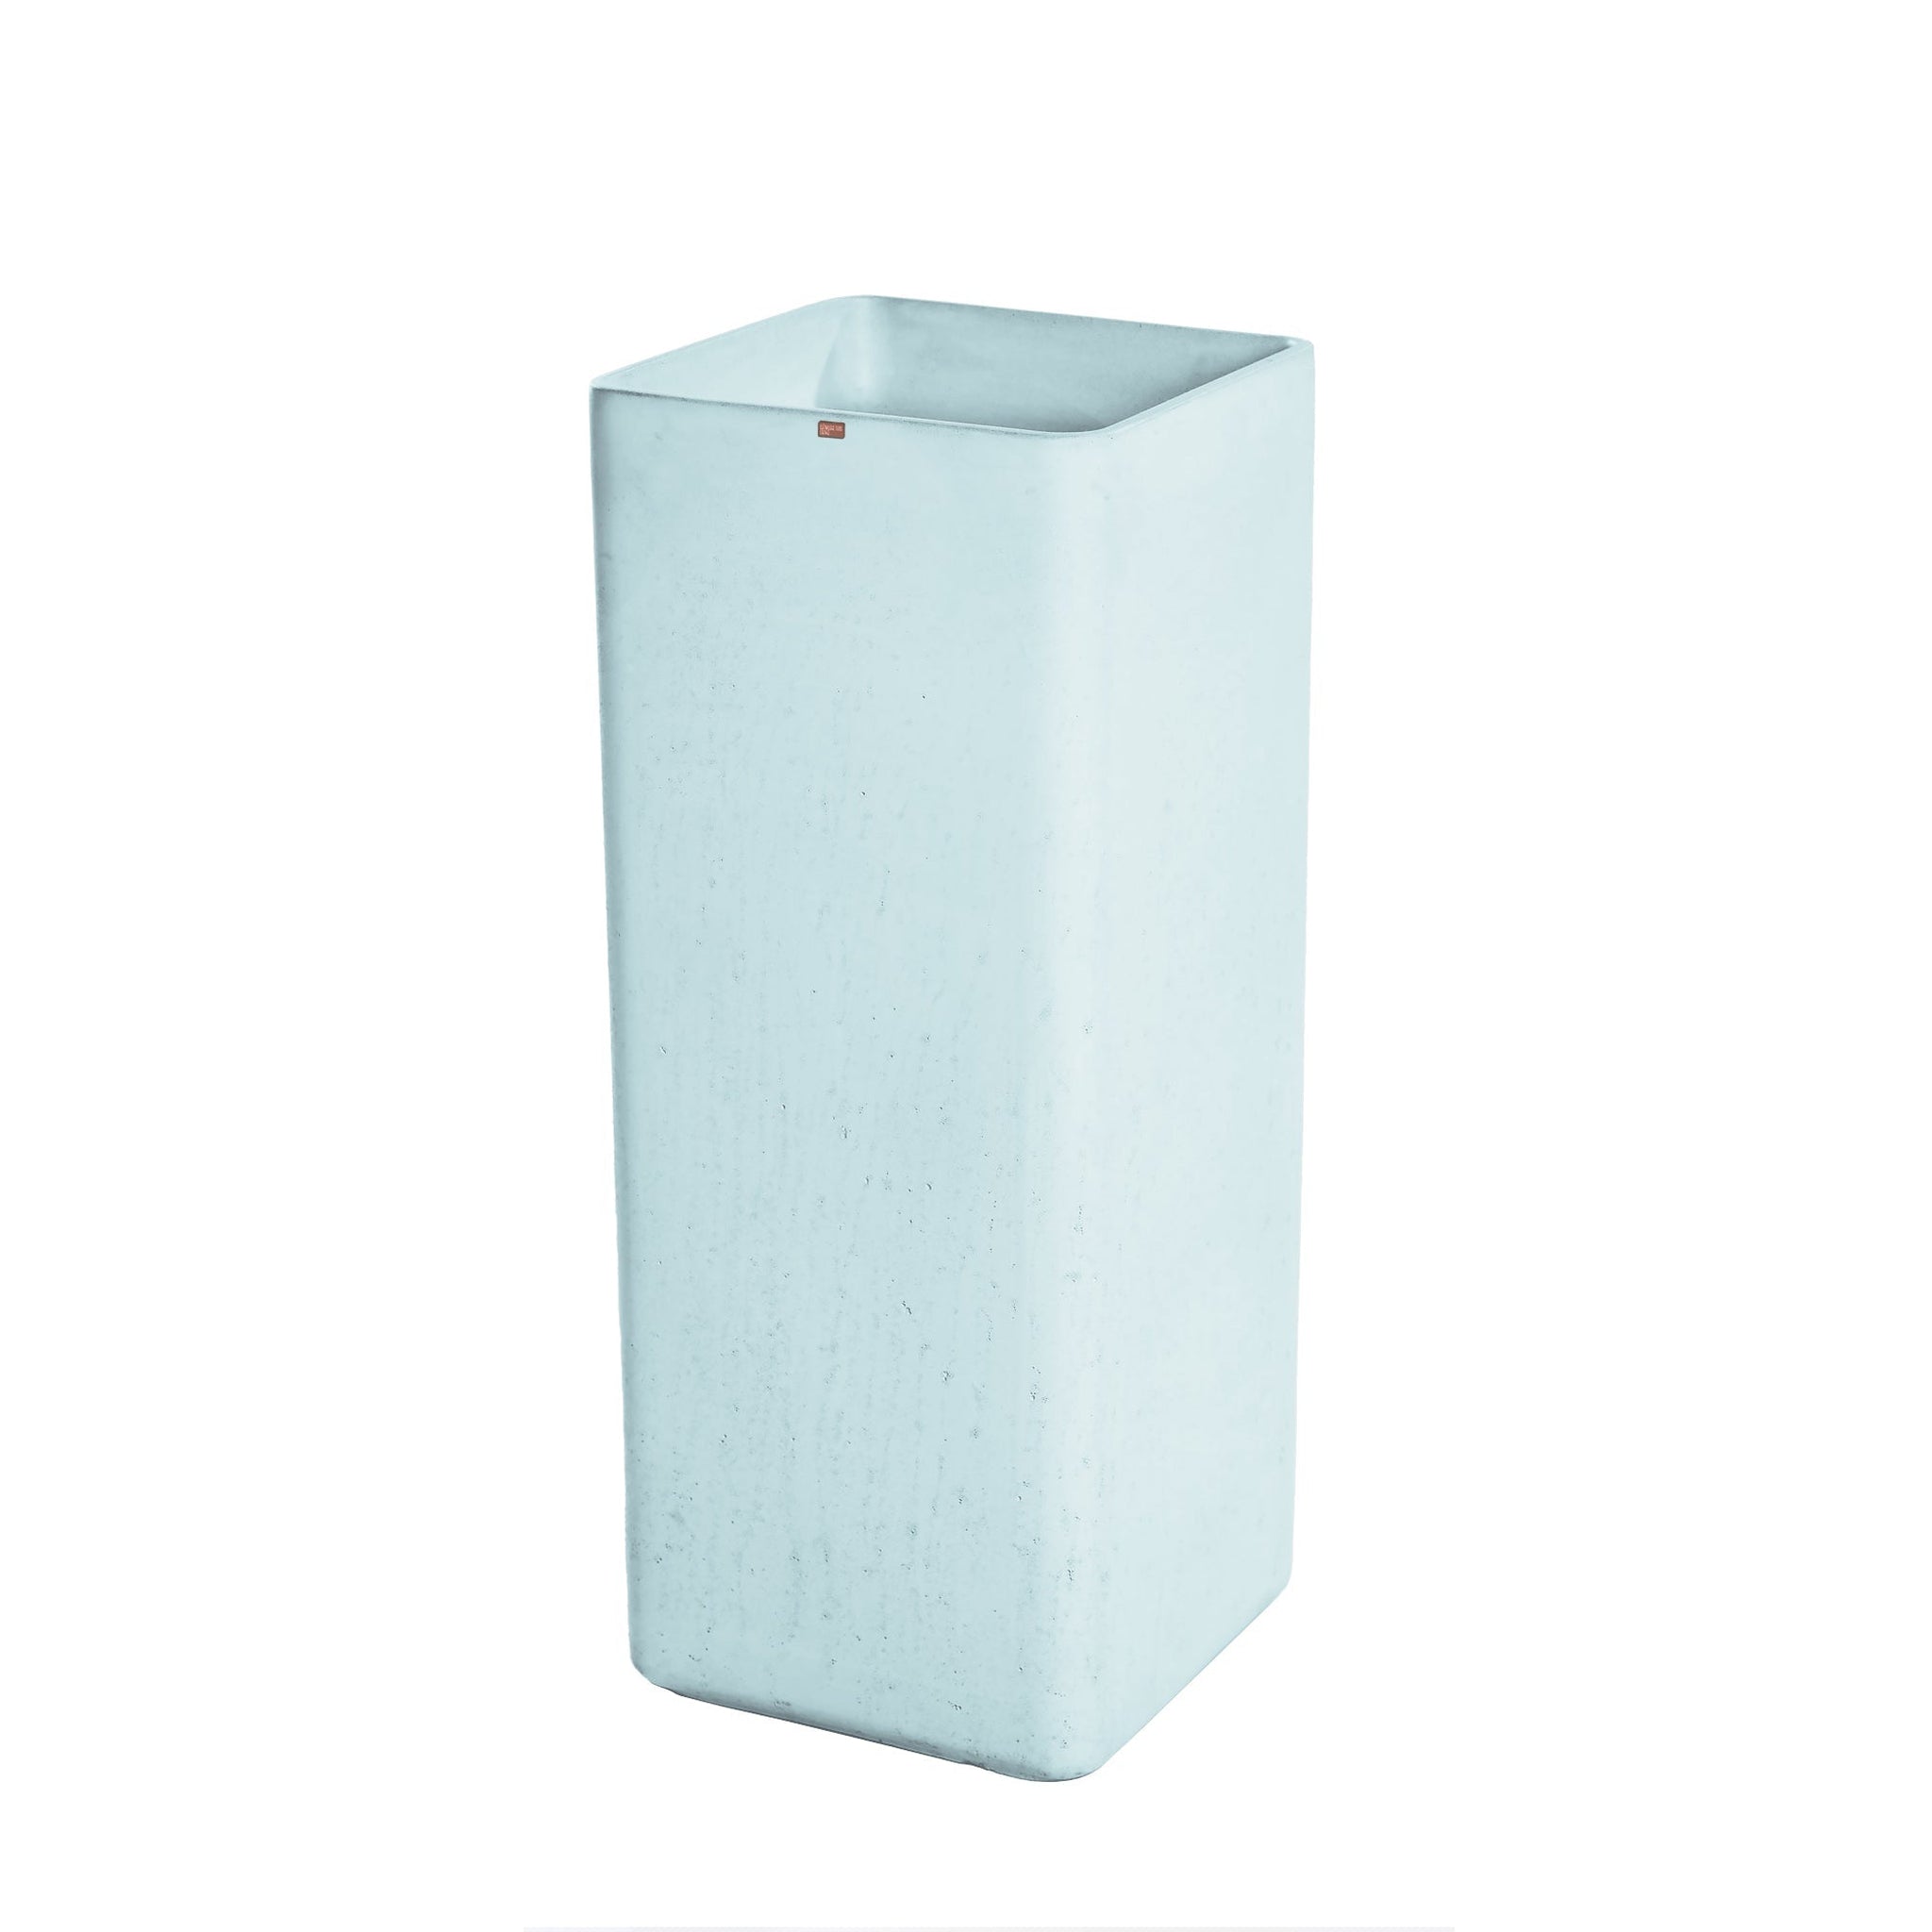 Konkretus, Konkretus Fladd06 15" Caribbean Blue Square Pedestal Concrete Bathroom Sink